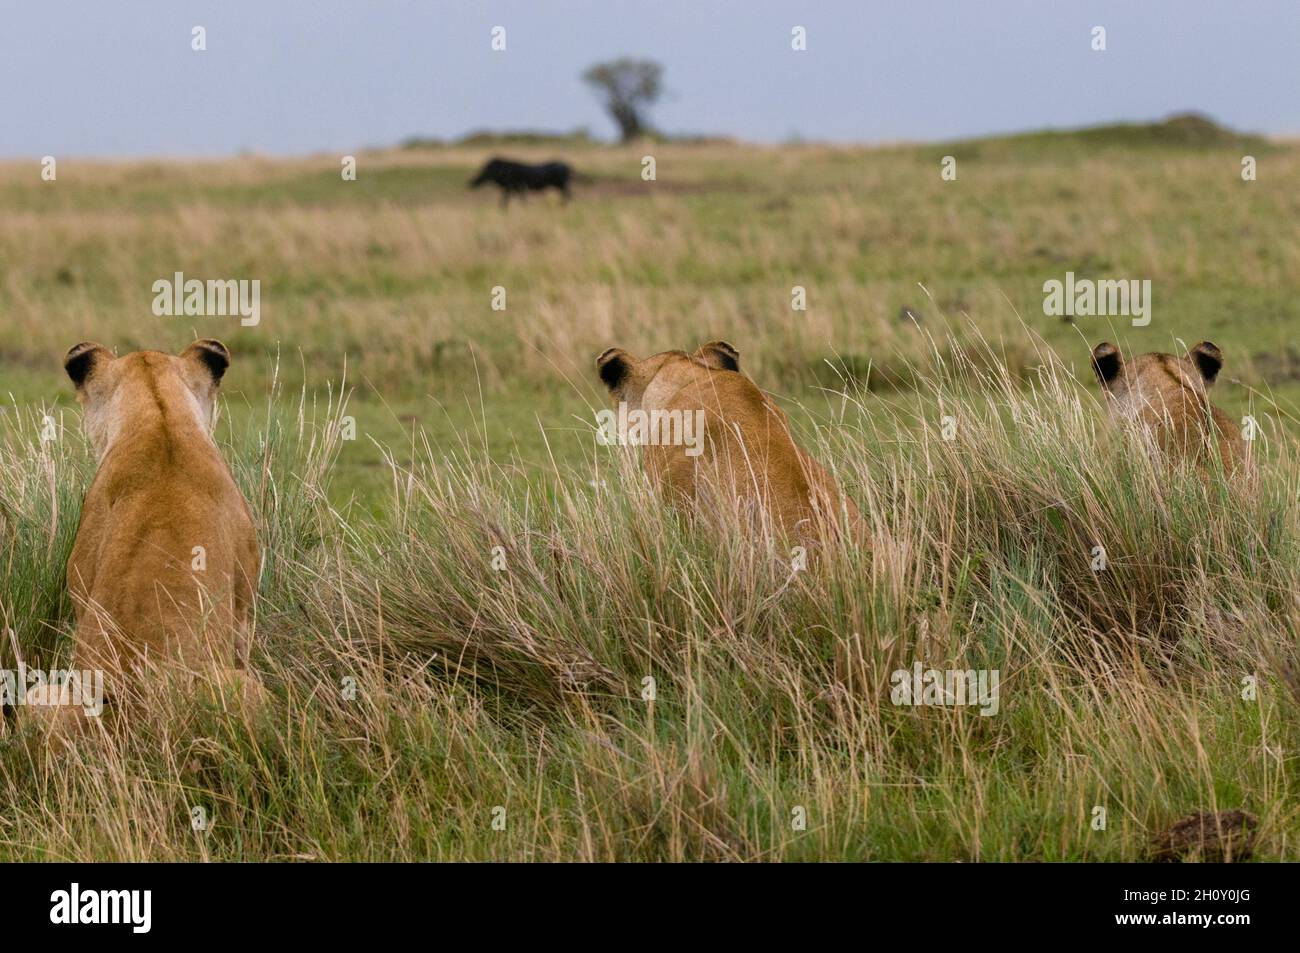 Three lionesses, Panthera leo, watching a warthog, Phacochoerus africanus, on the savanna. Masai Mara National Reserve, Kenya. Stock Photo